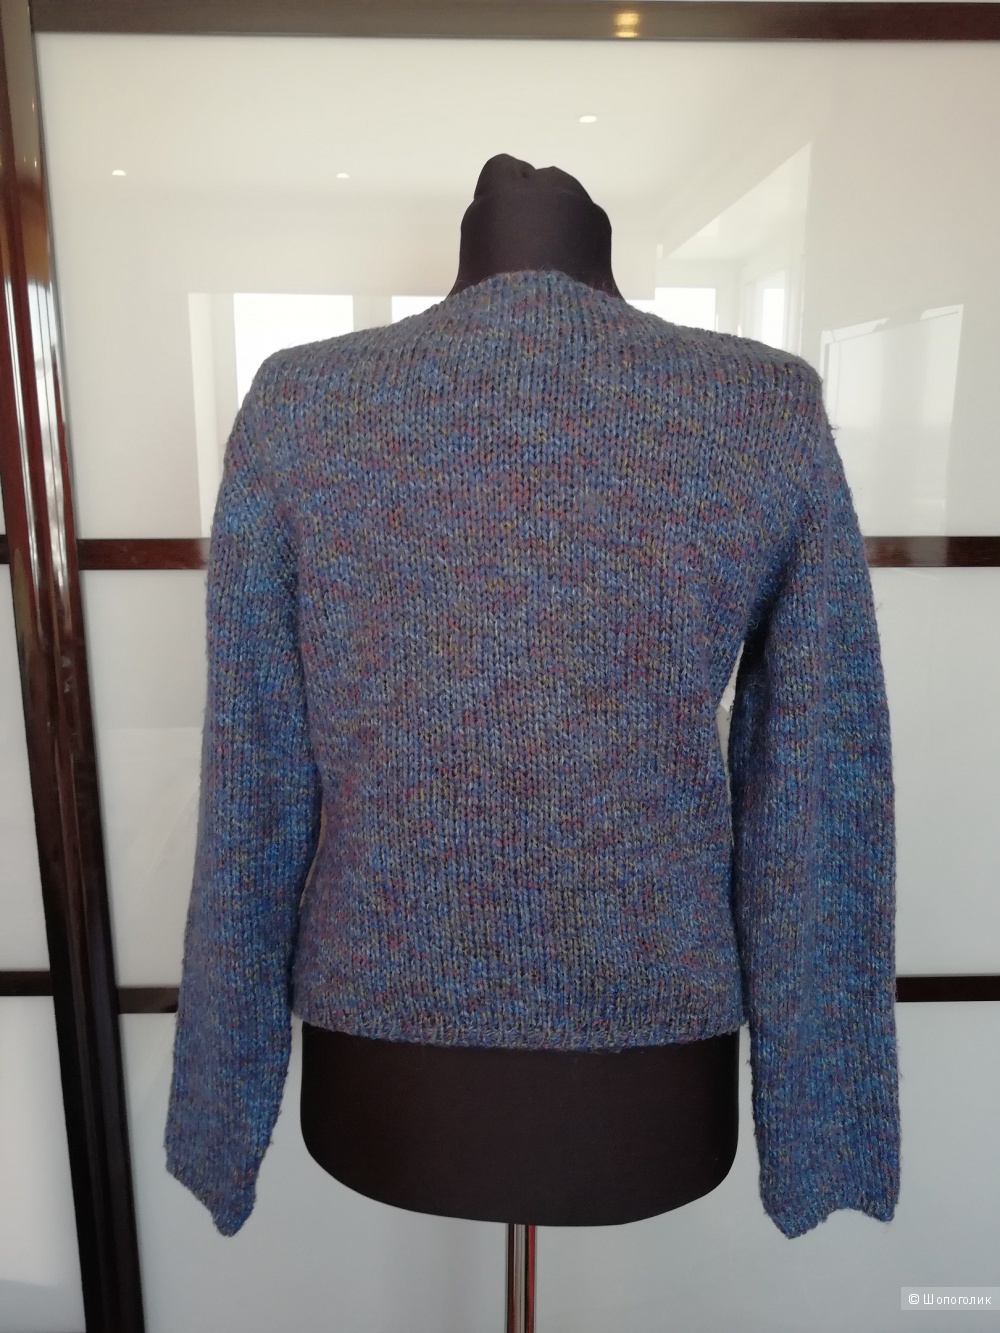 Colin's шерстяной свитер - джемпер  размер 46-48